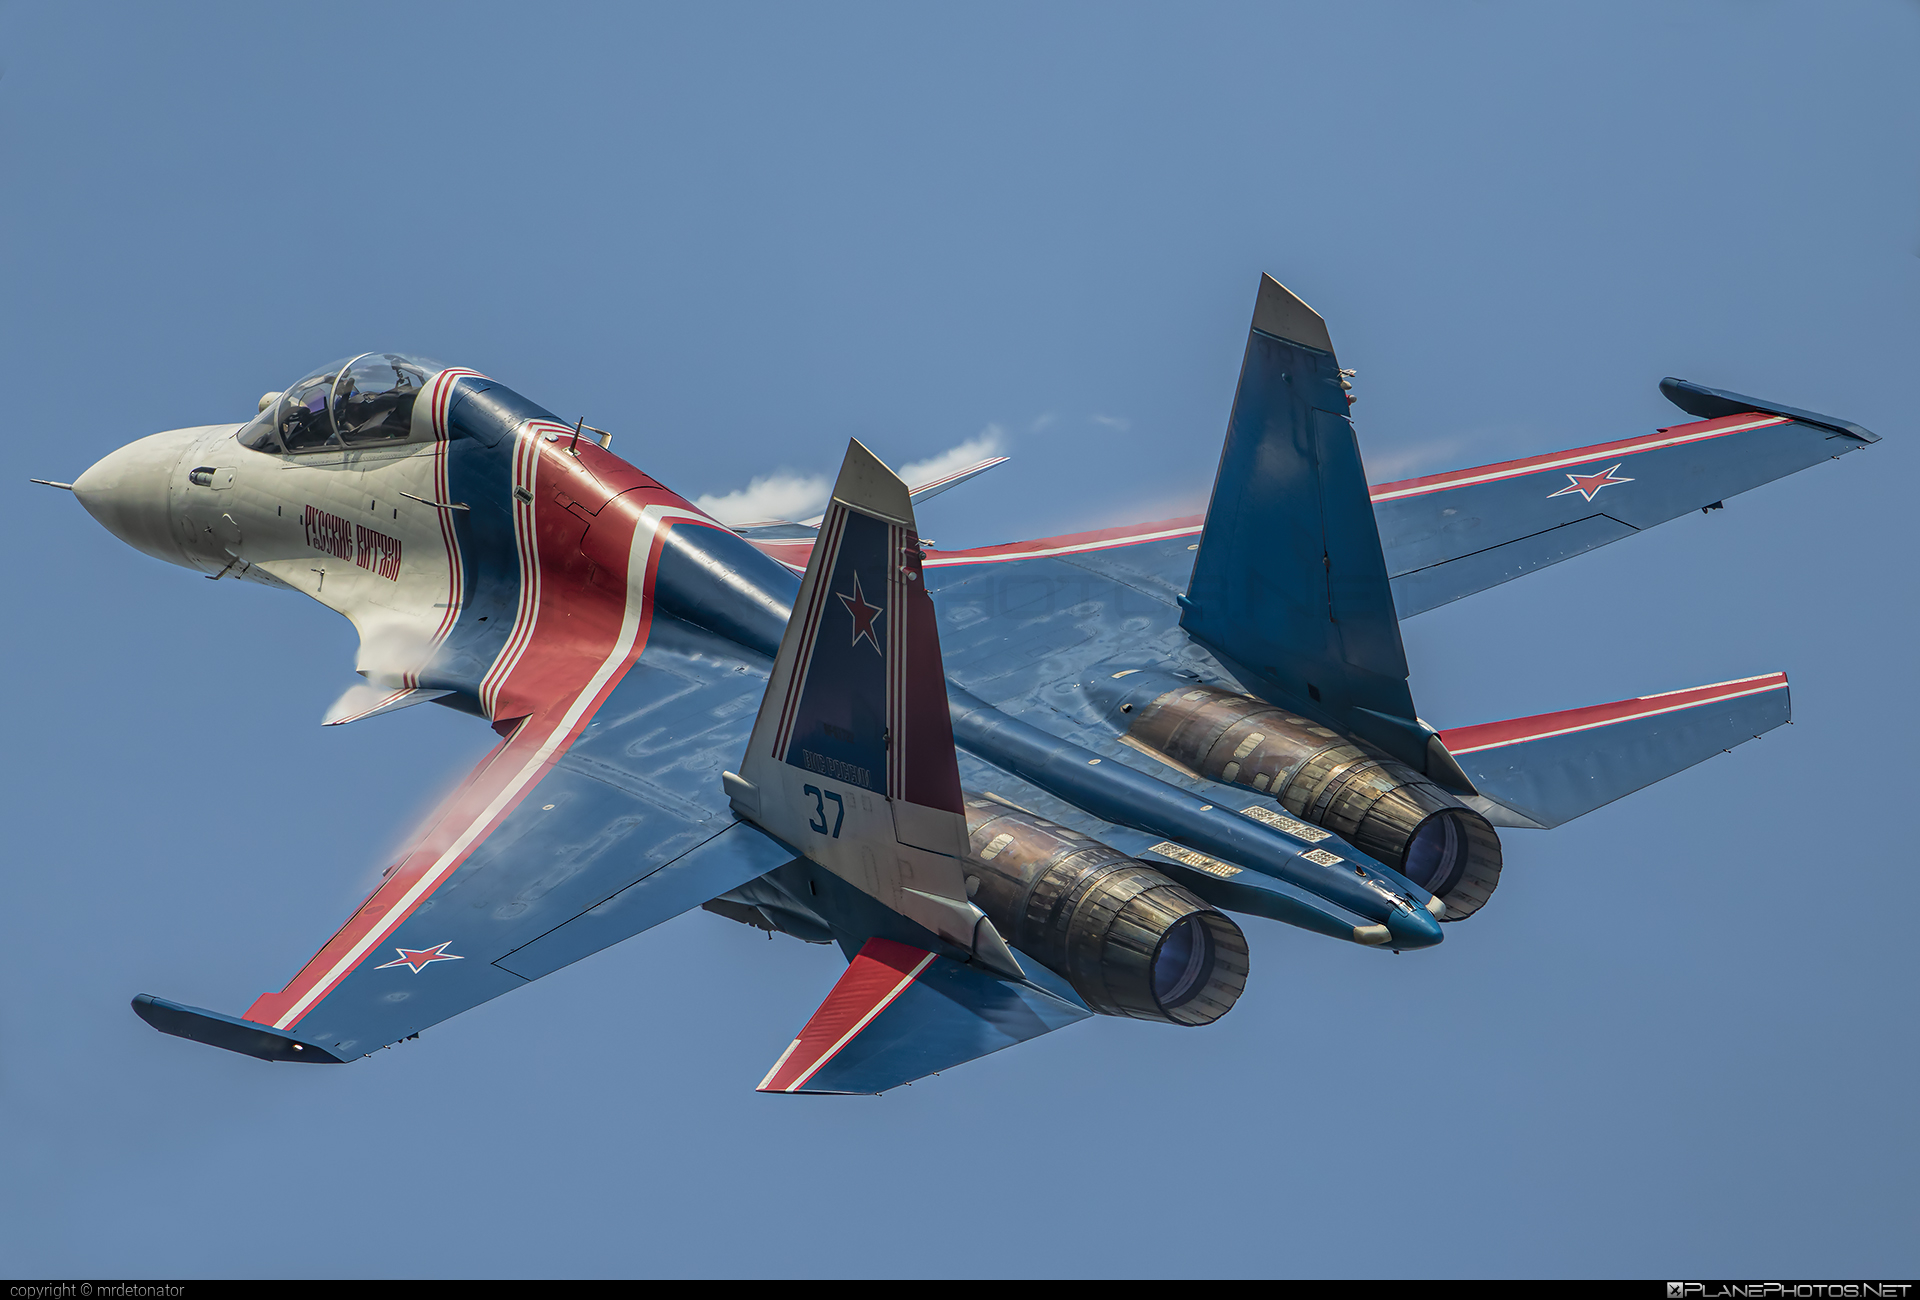 Sukhoi Su-30SM - RF-81722 operated by Voyenno-vozdushnye sily Rossii (Russian Air Force) #maks2019 #russianknights #russkiyevityazi #su30 #su30sm #sukhoi #sukhoi30 #sukhoisu30sm